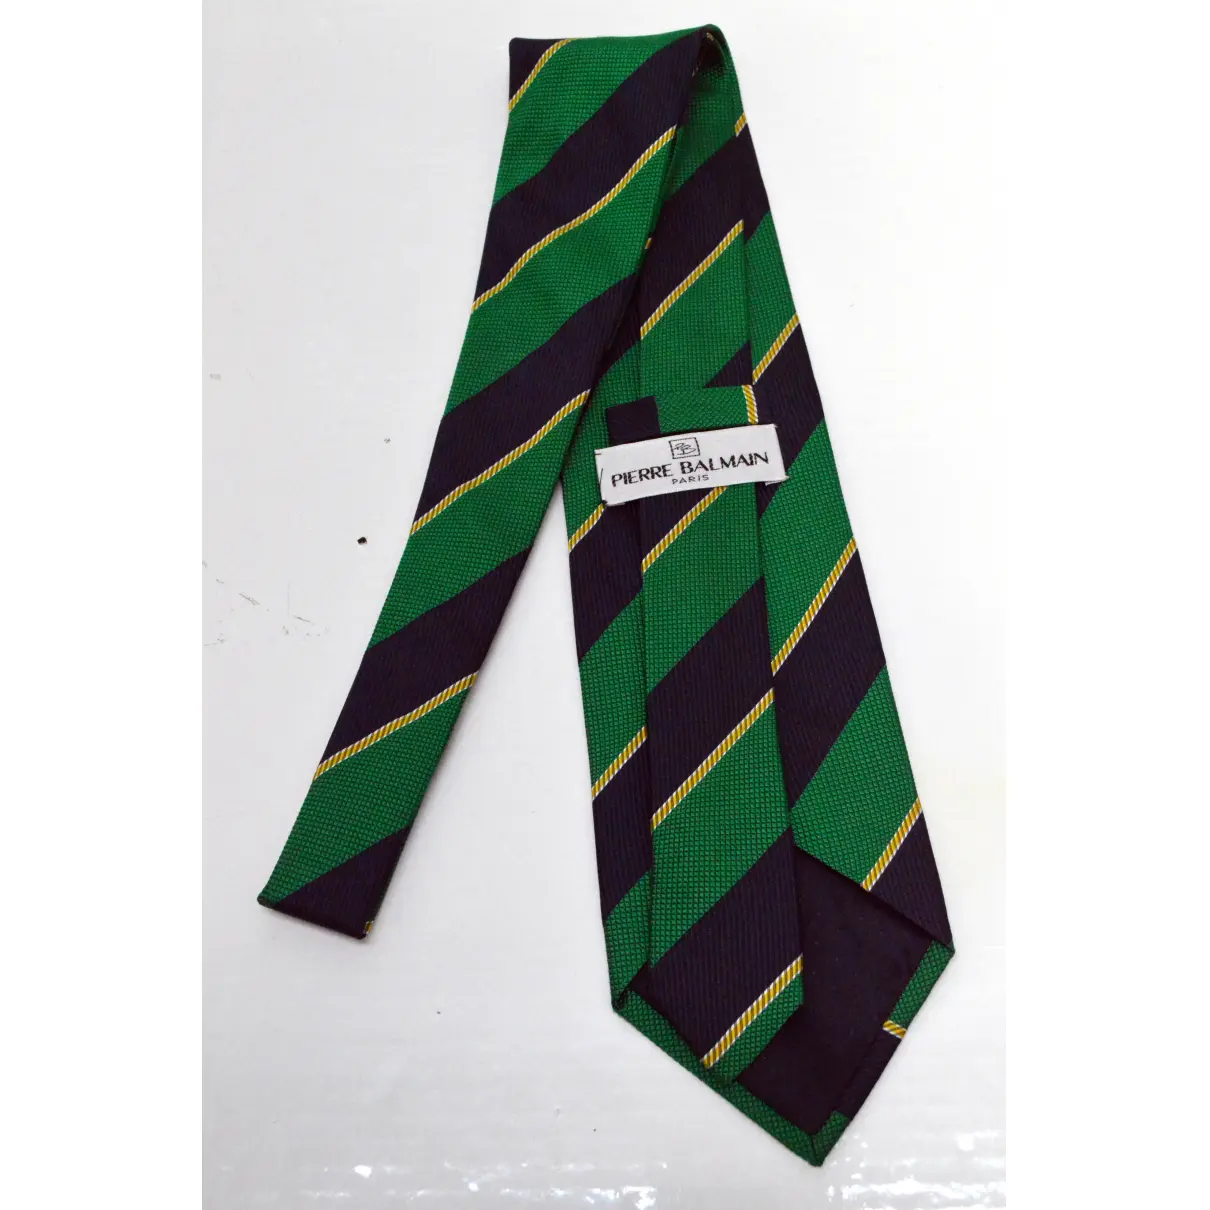 Buy Pierre Balmain Silk tie online - Vintage